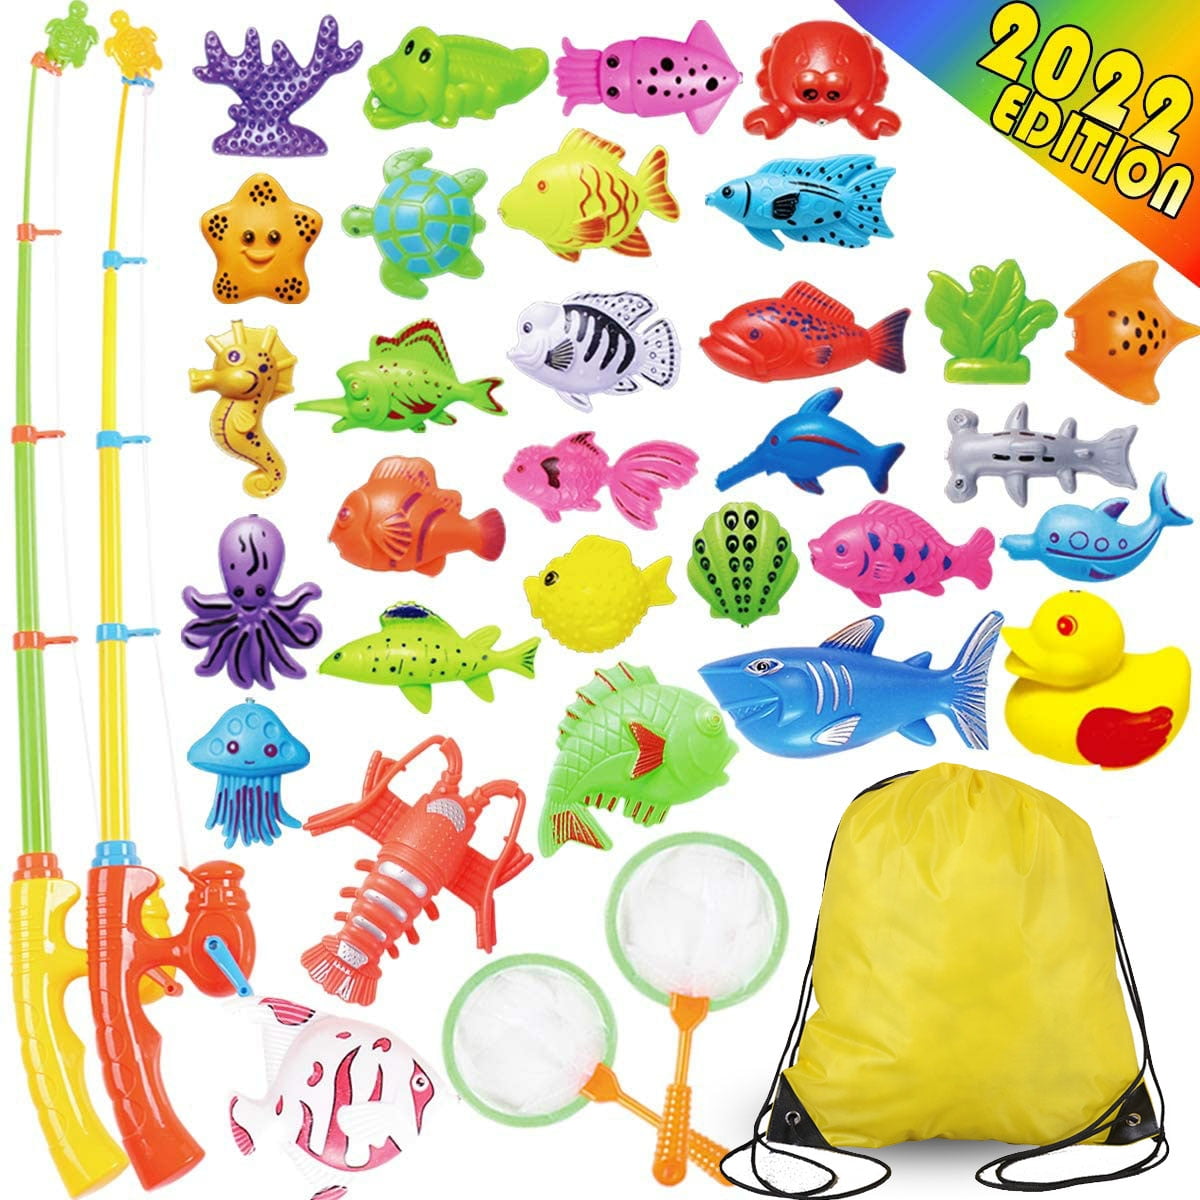 4pcs Rod Fishing Toy Kids Baby Pretend Play Preschool Educational Bath Toy 